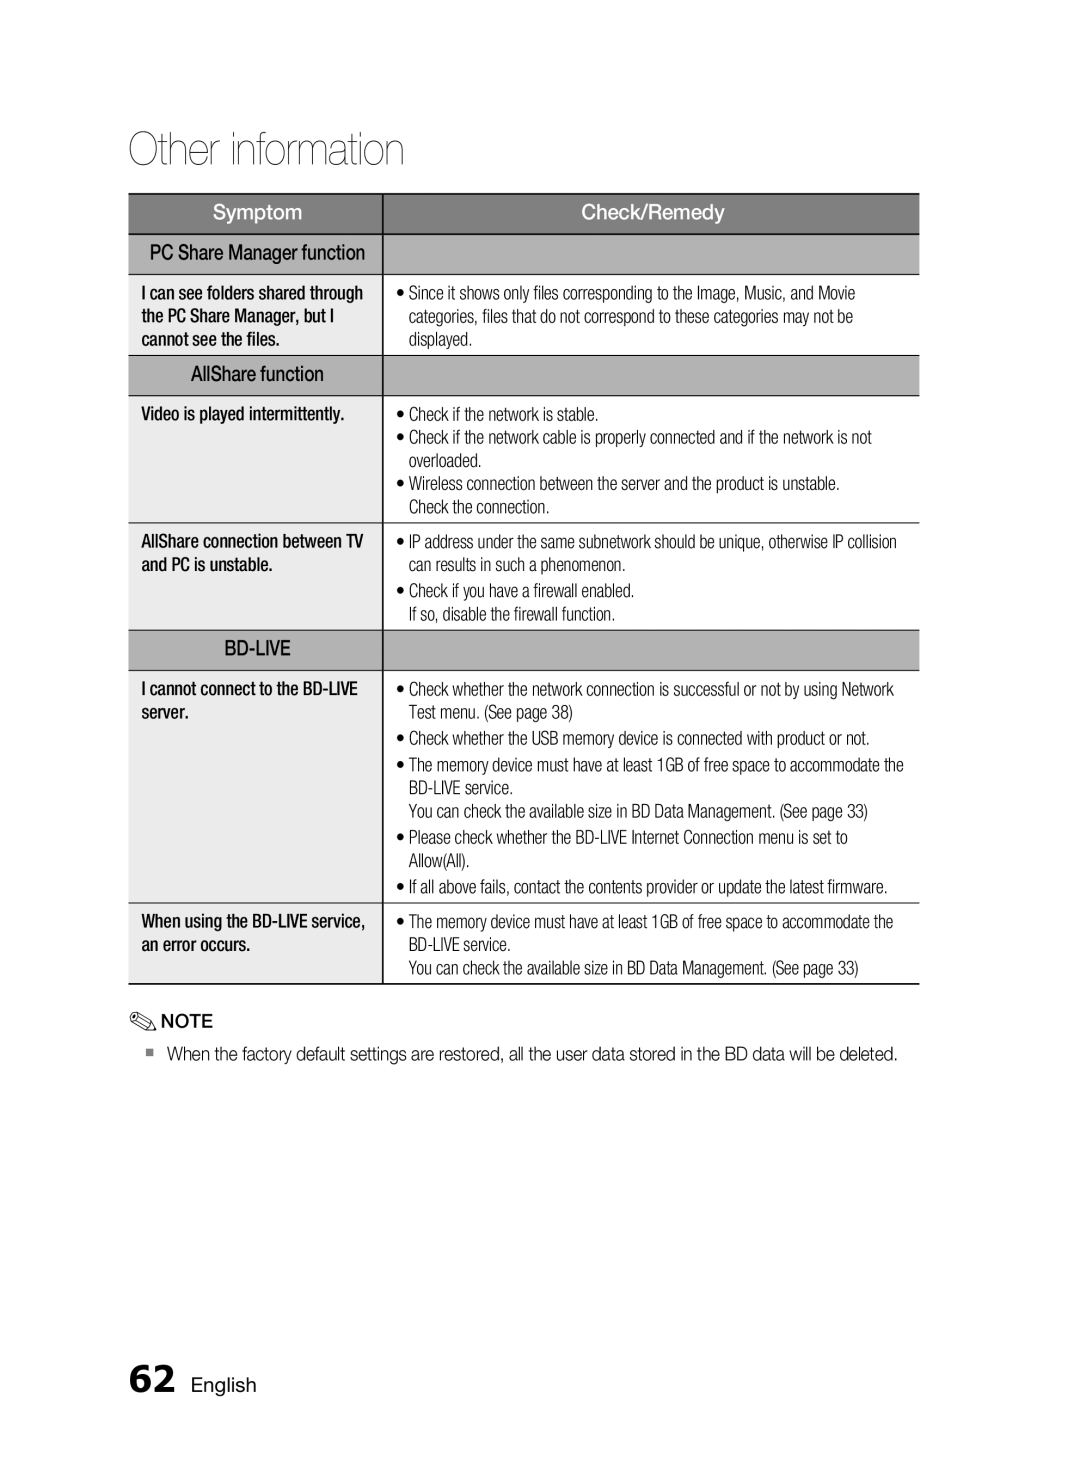 Samsung HT-C5200 user manual English, Other information, Symptom, Check/Remedy 